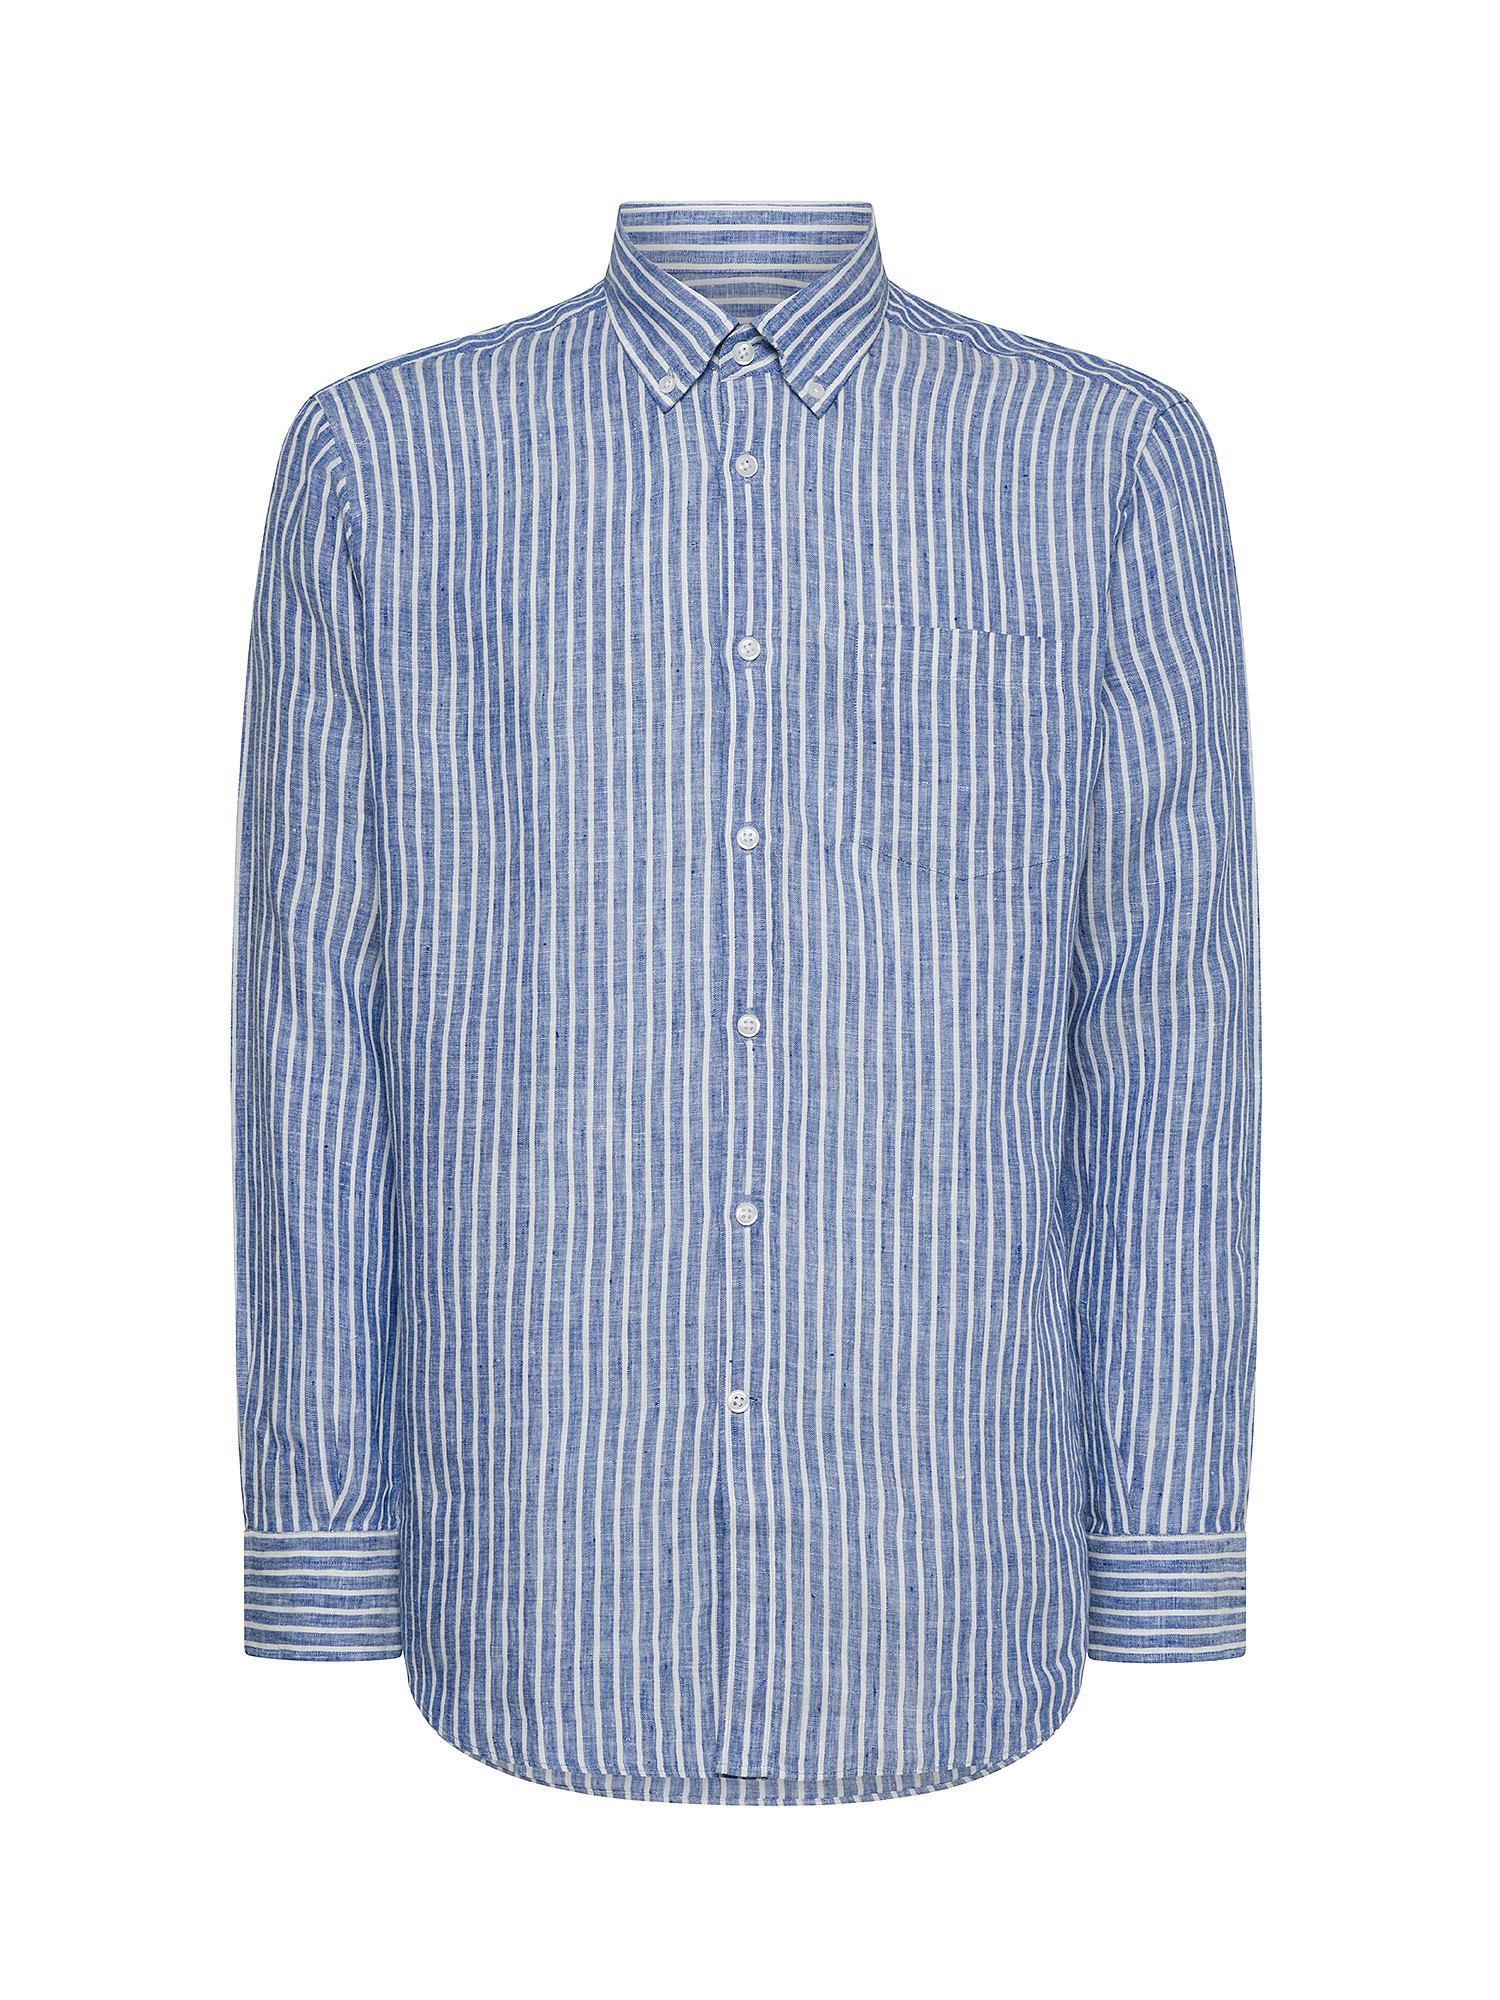 Luca D'Altieri - Regular fit shirt in pure linen, Blue, large image number 0